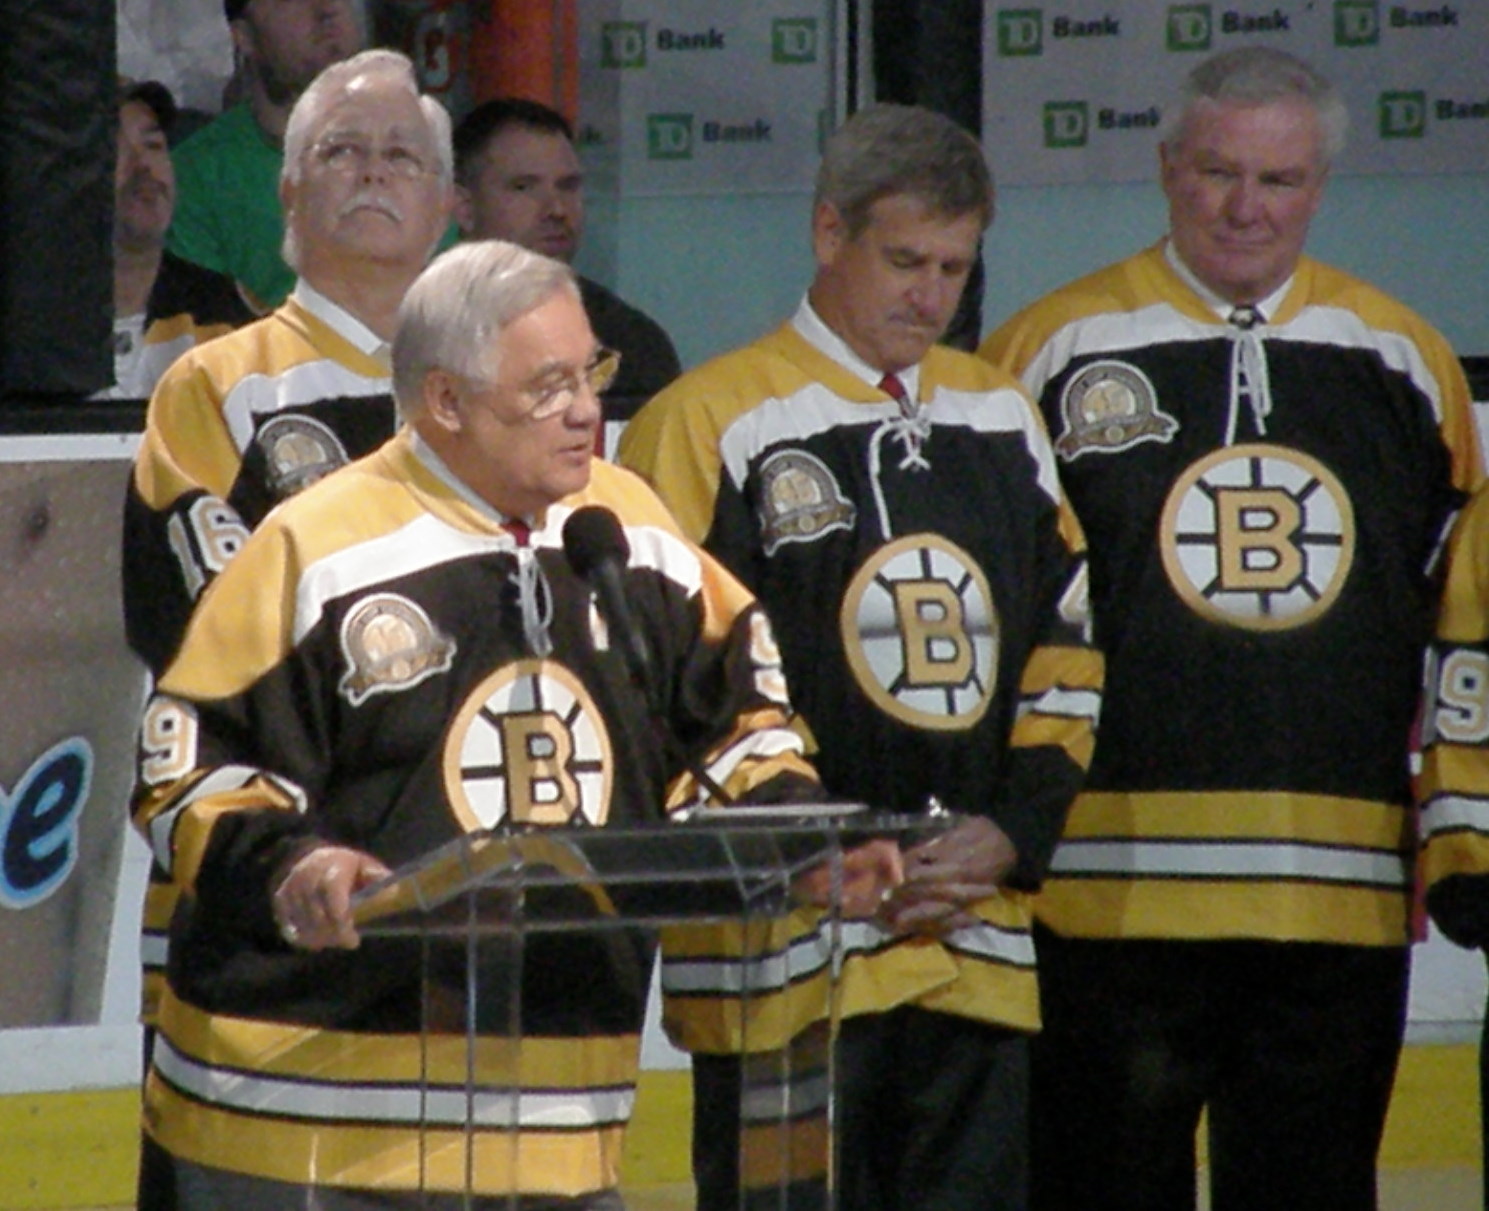 McFarlane NHL Legends 8 Boston Bruins Terry O'Reilly Figure